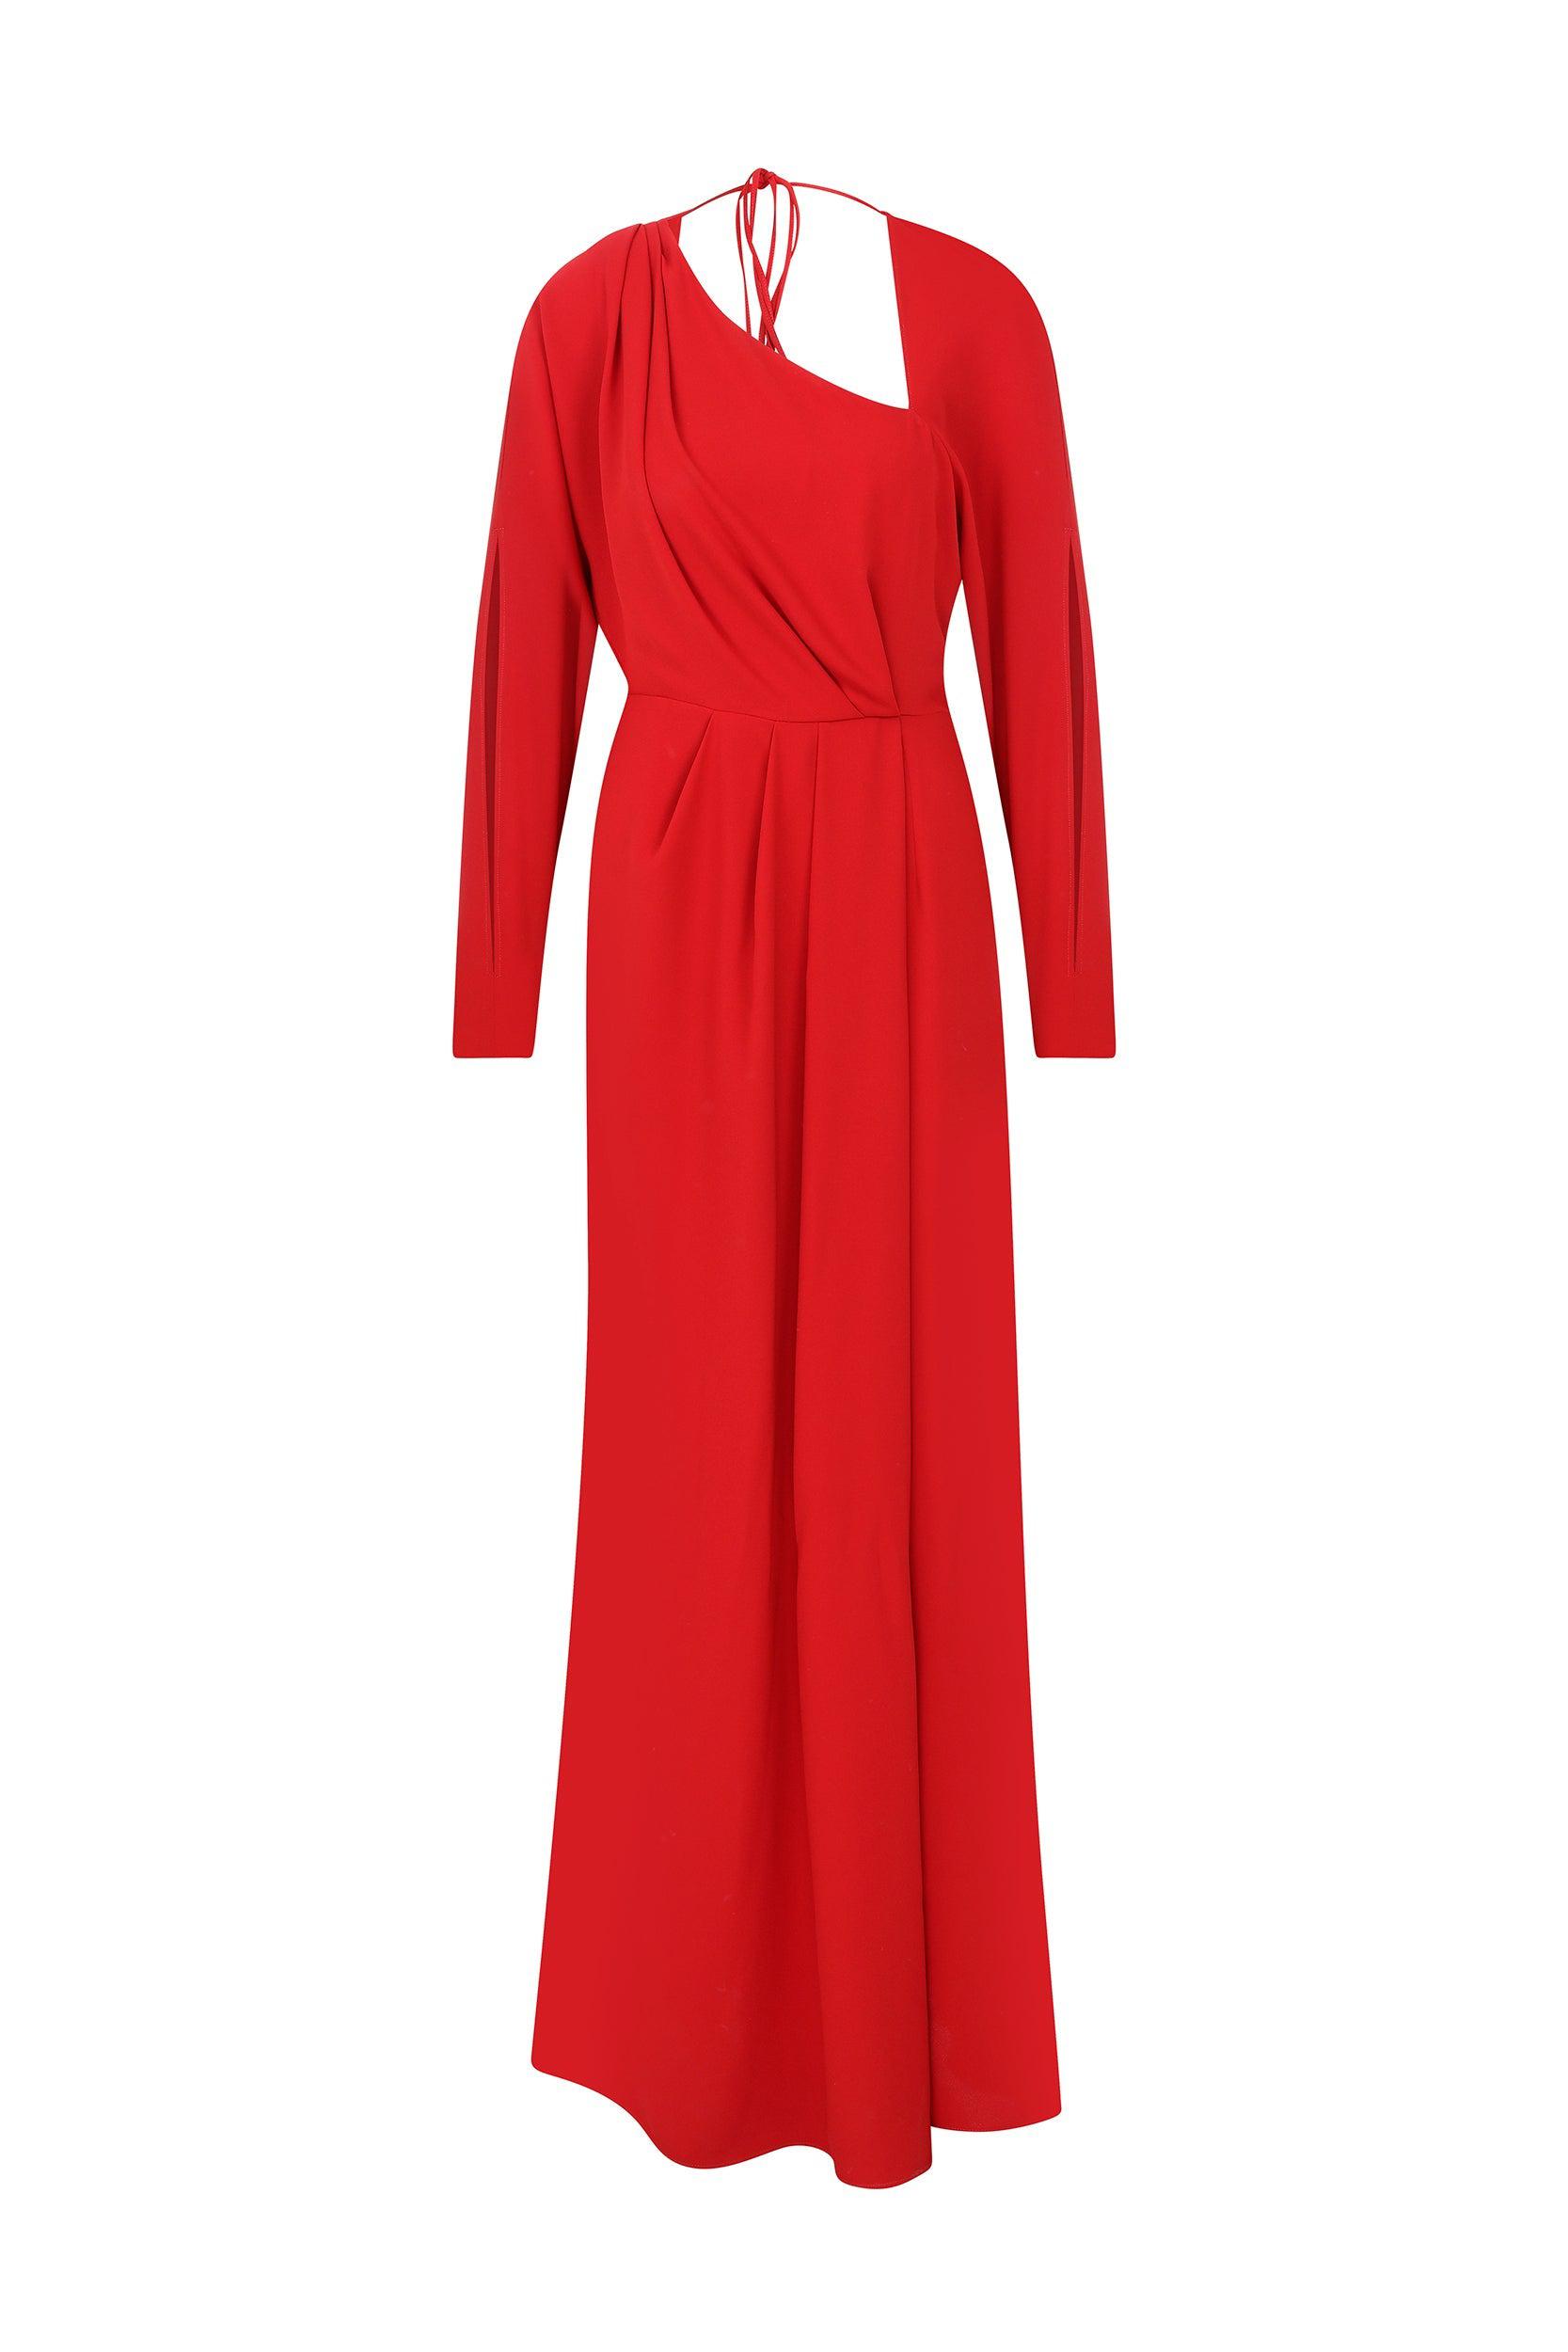 Roman Red Full Sleeve Evening Dress. 2